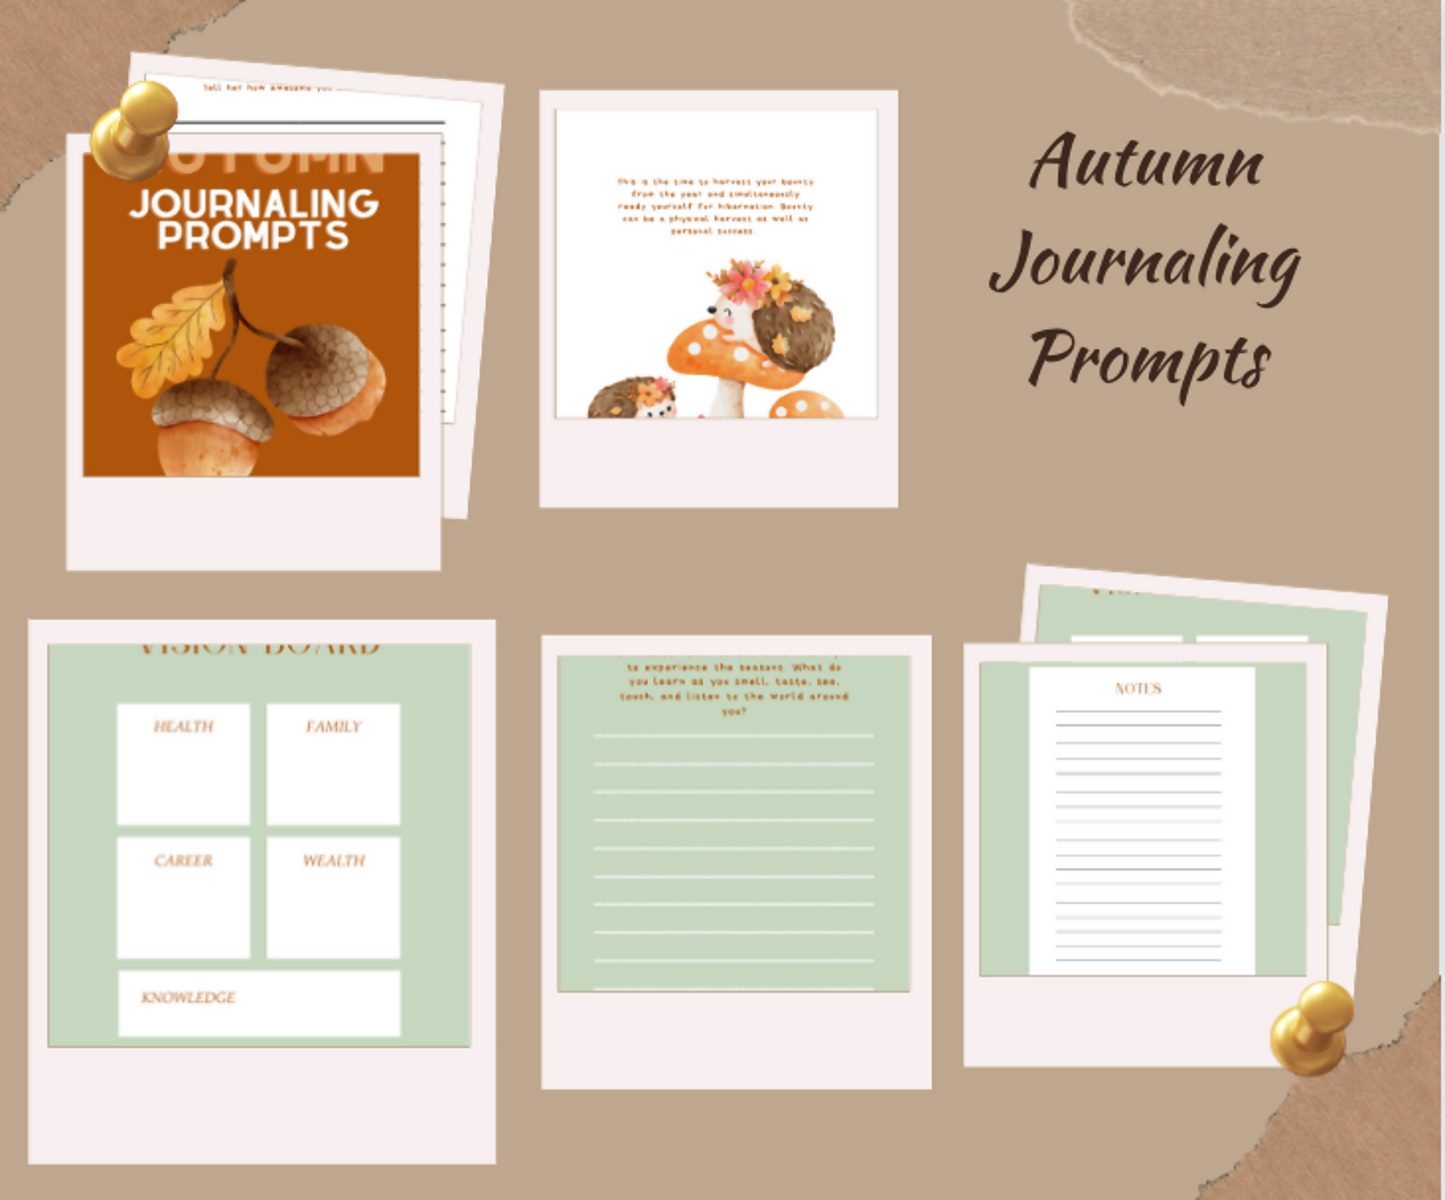 Autumn Journaling Prompts: Harvest and Hibernation